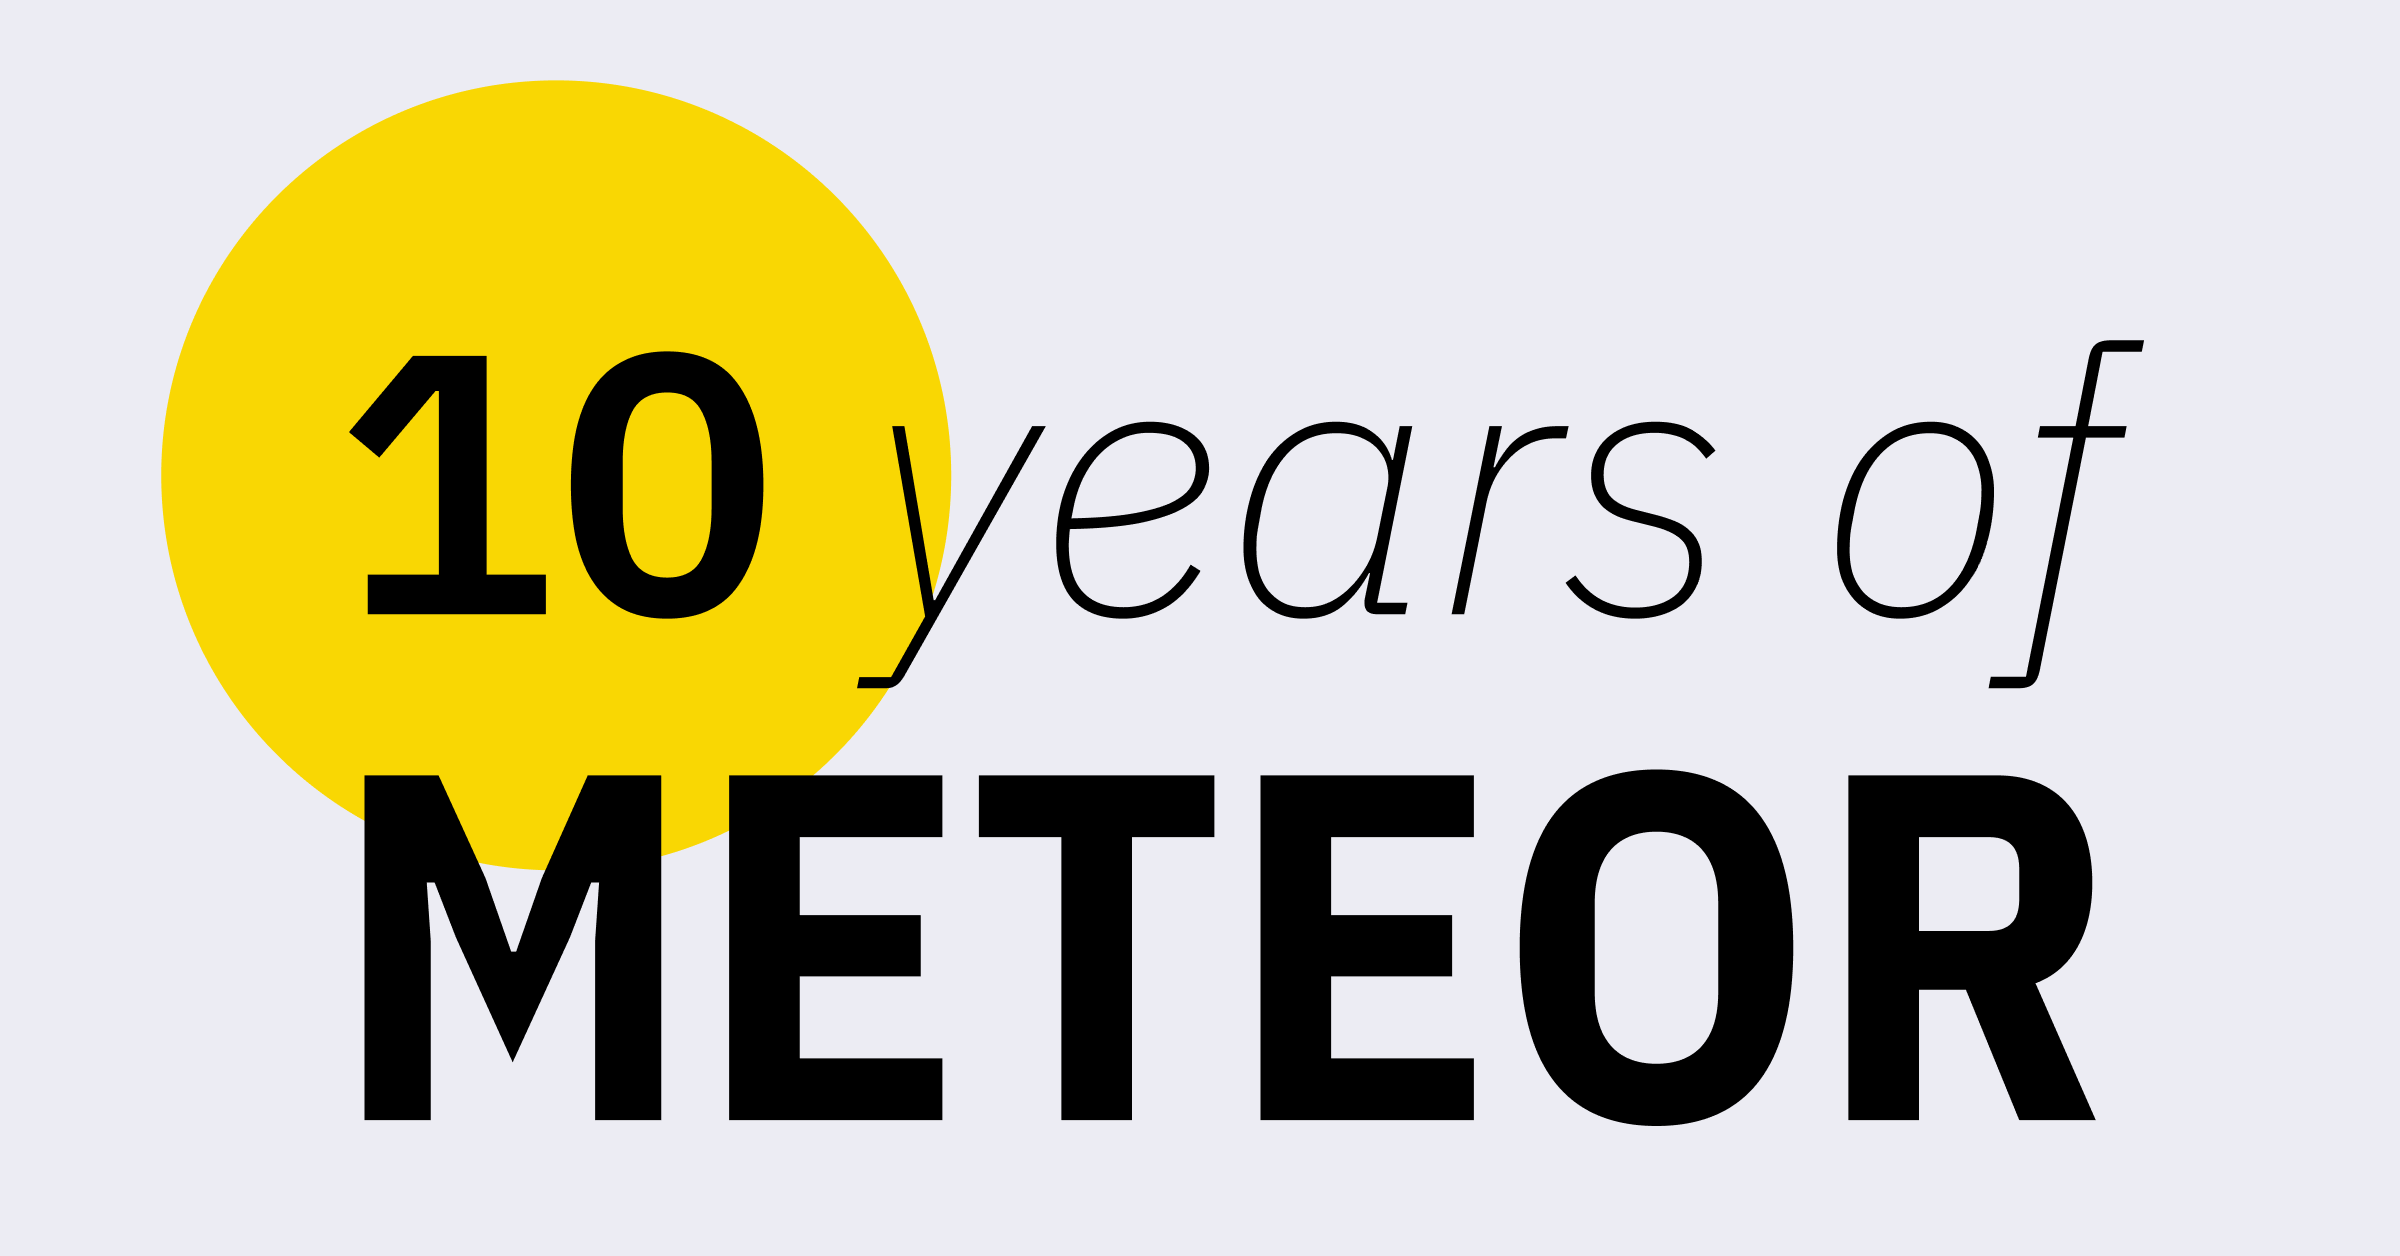 10 Years of Meteor